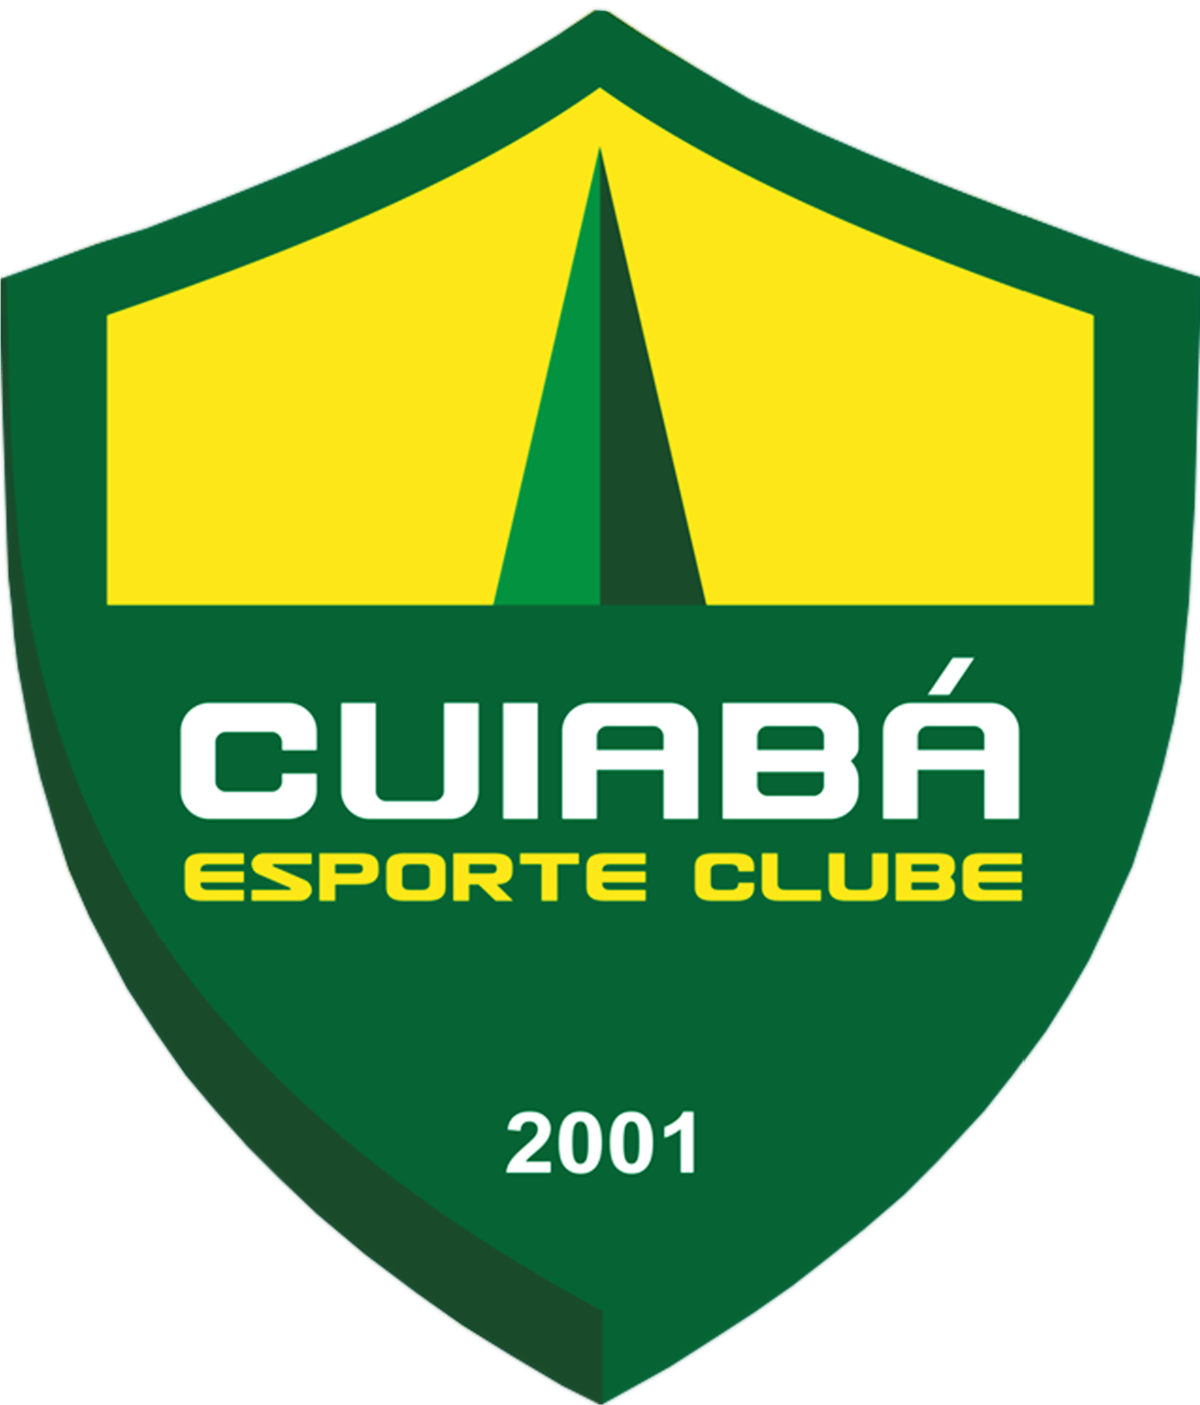 Cuiabá vs. Fluminense. Pronóstico: Fluminense B puede complicar a un débil rival